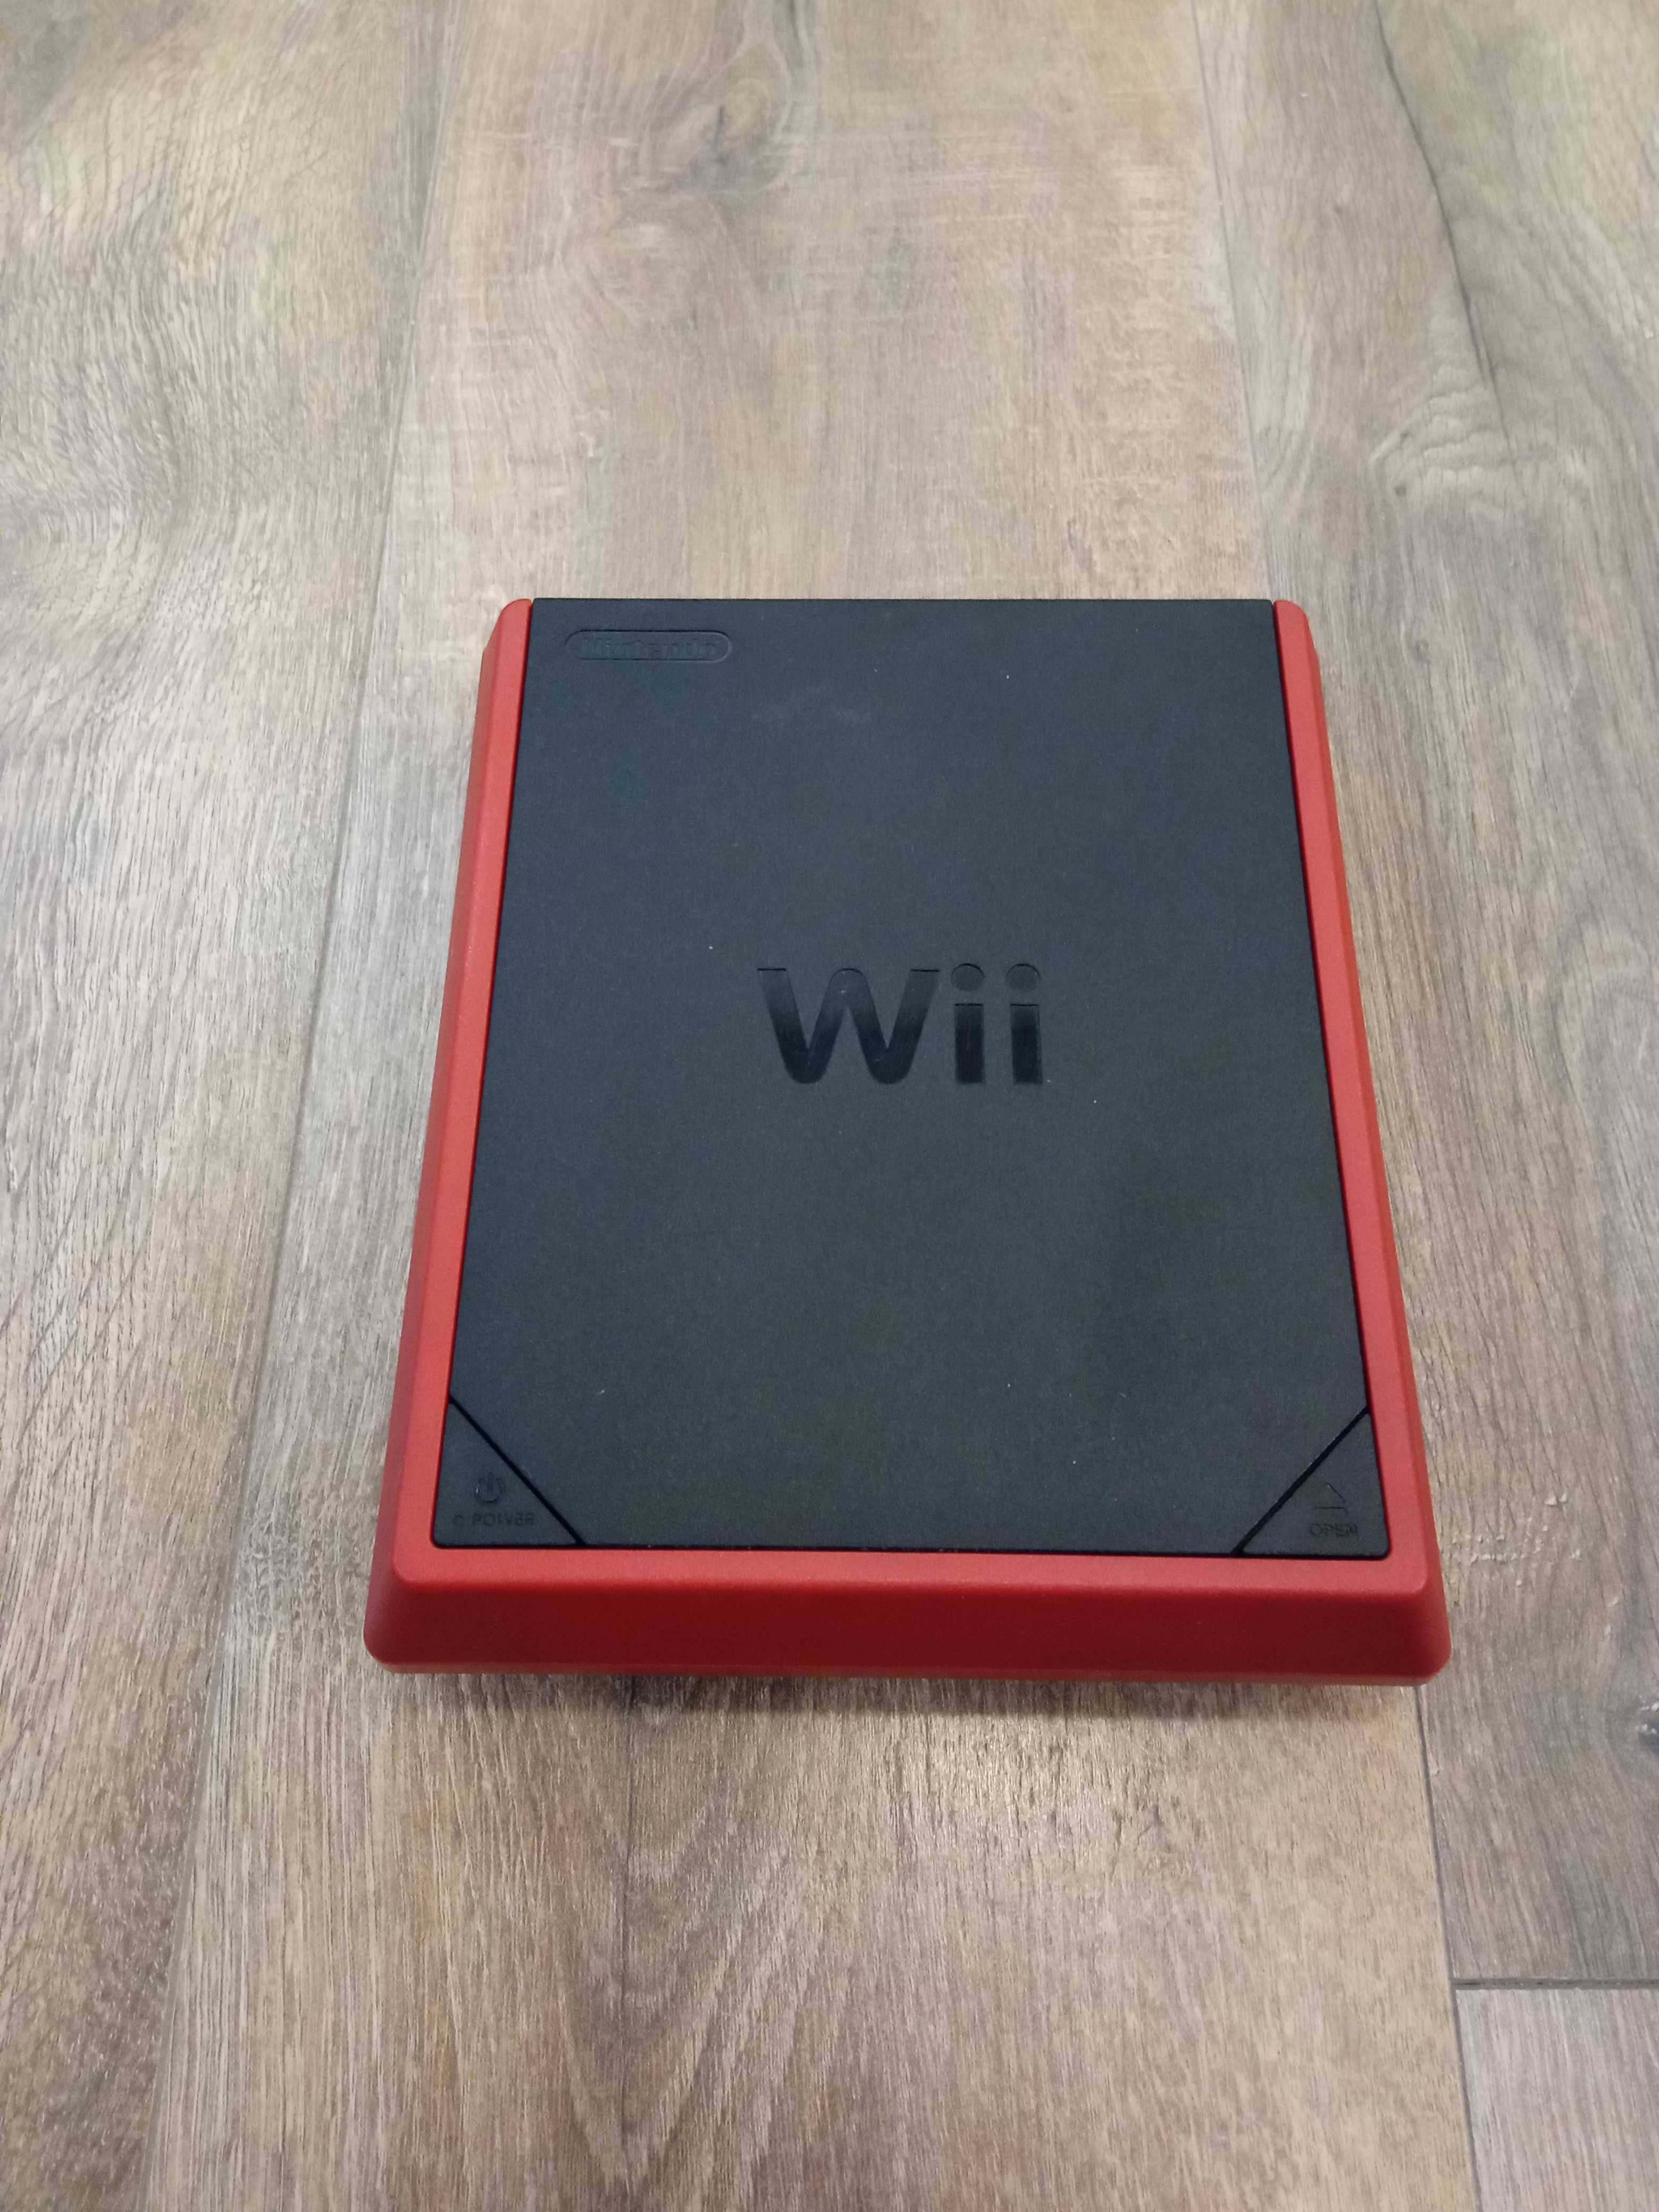 Nintendo Wii mini